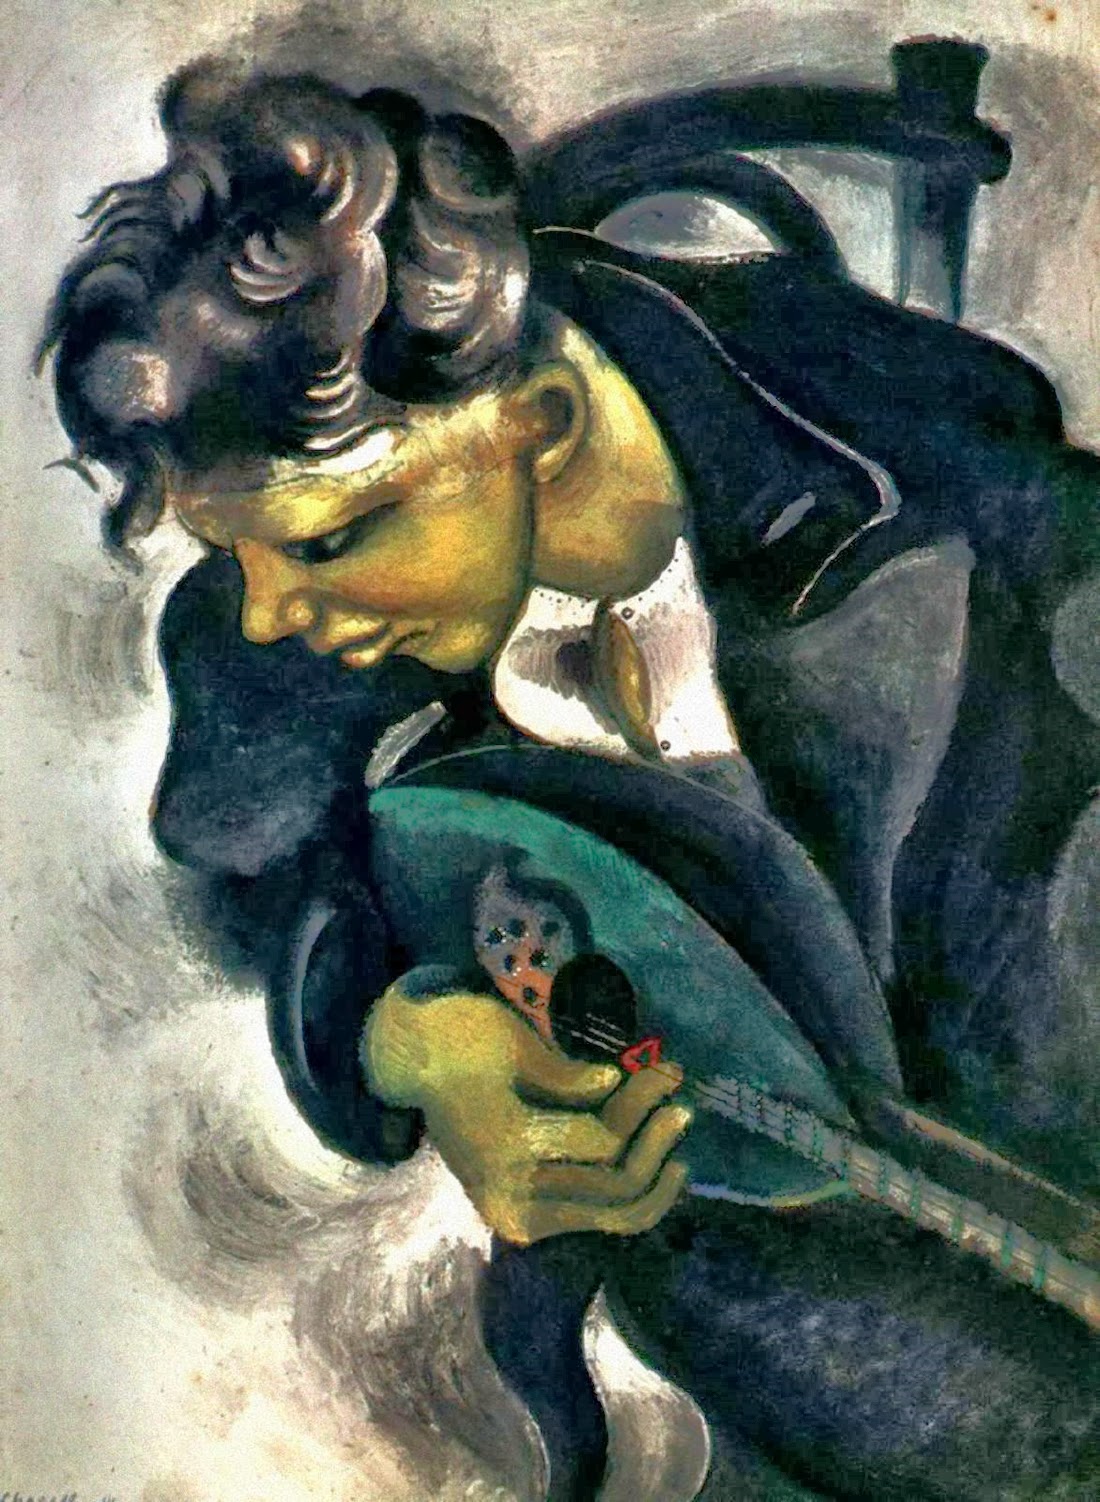 Marc+Chagall-1887-1985 (151).jpg